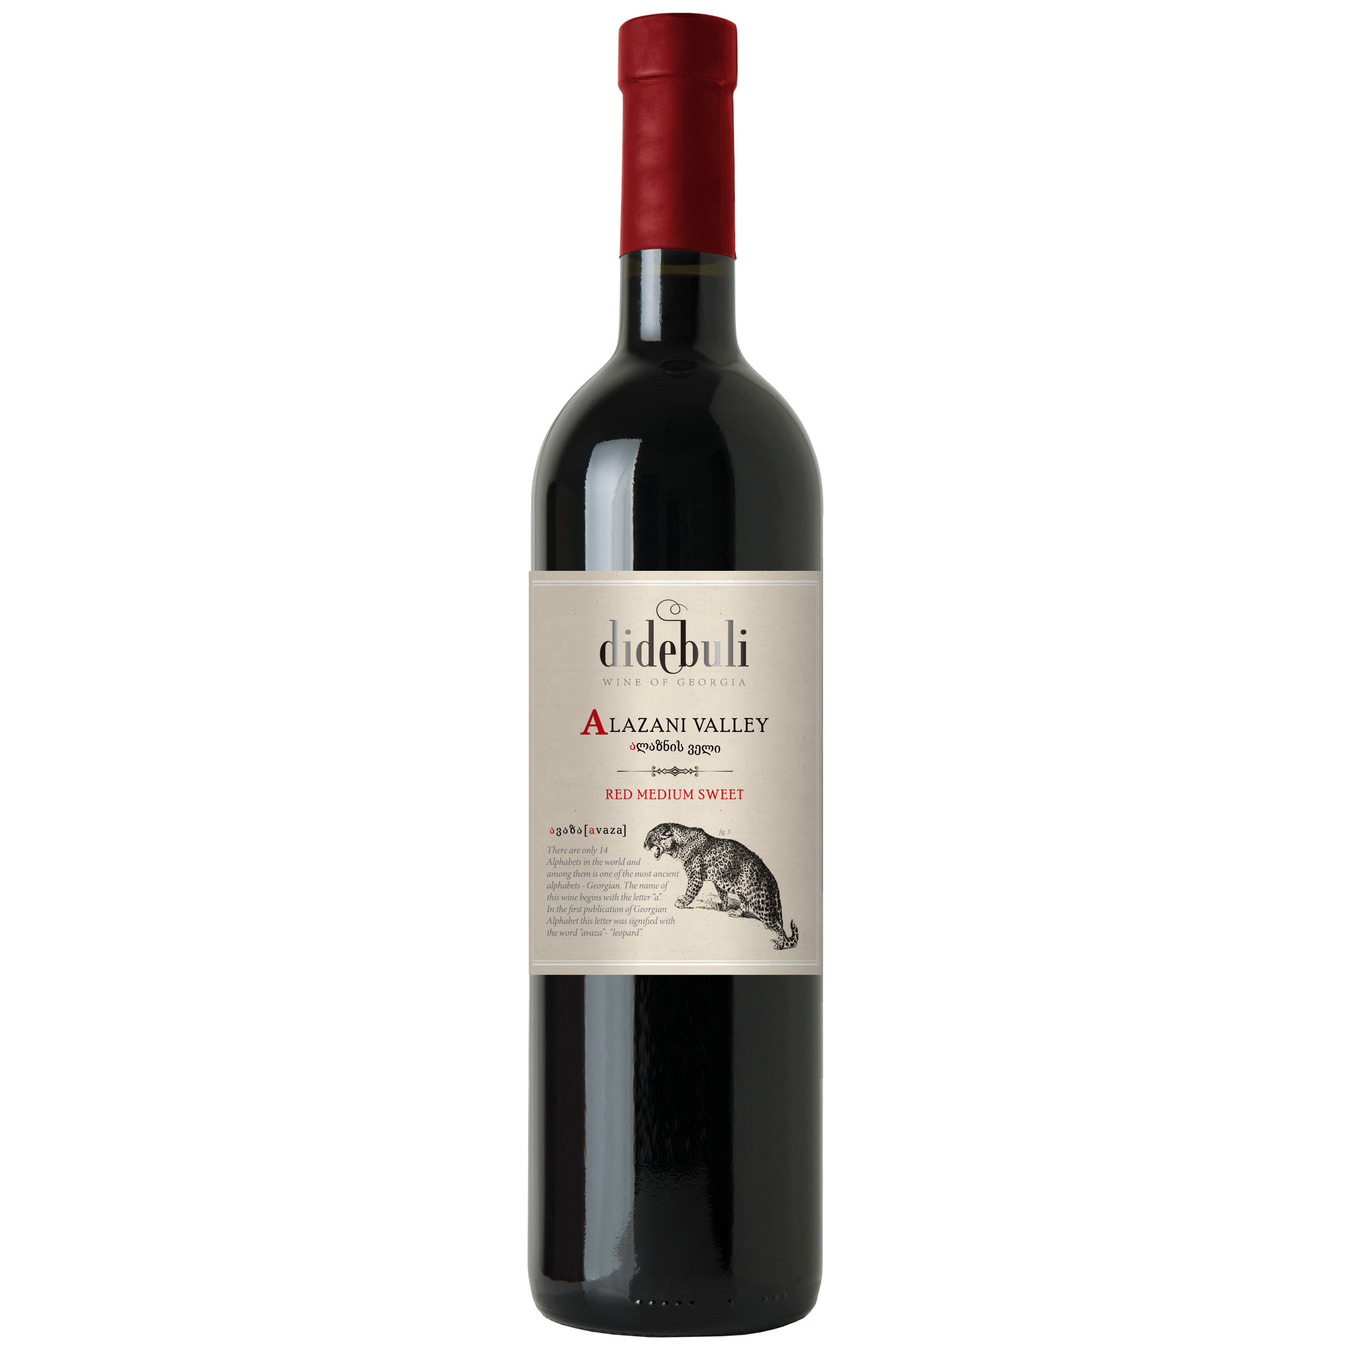 Didebuli Alazani Valley red semi-sweet wine 11,5% 0,75l